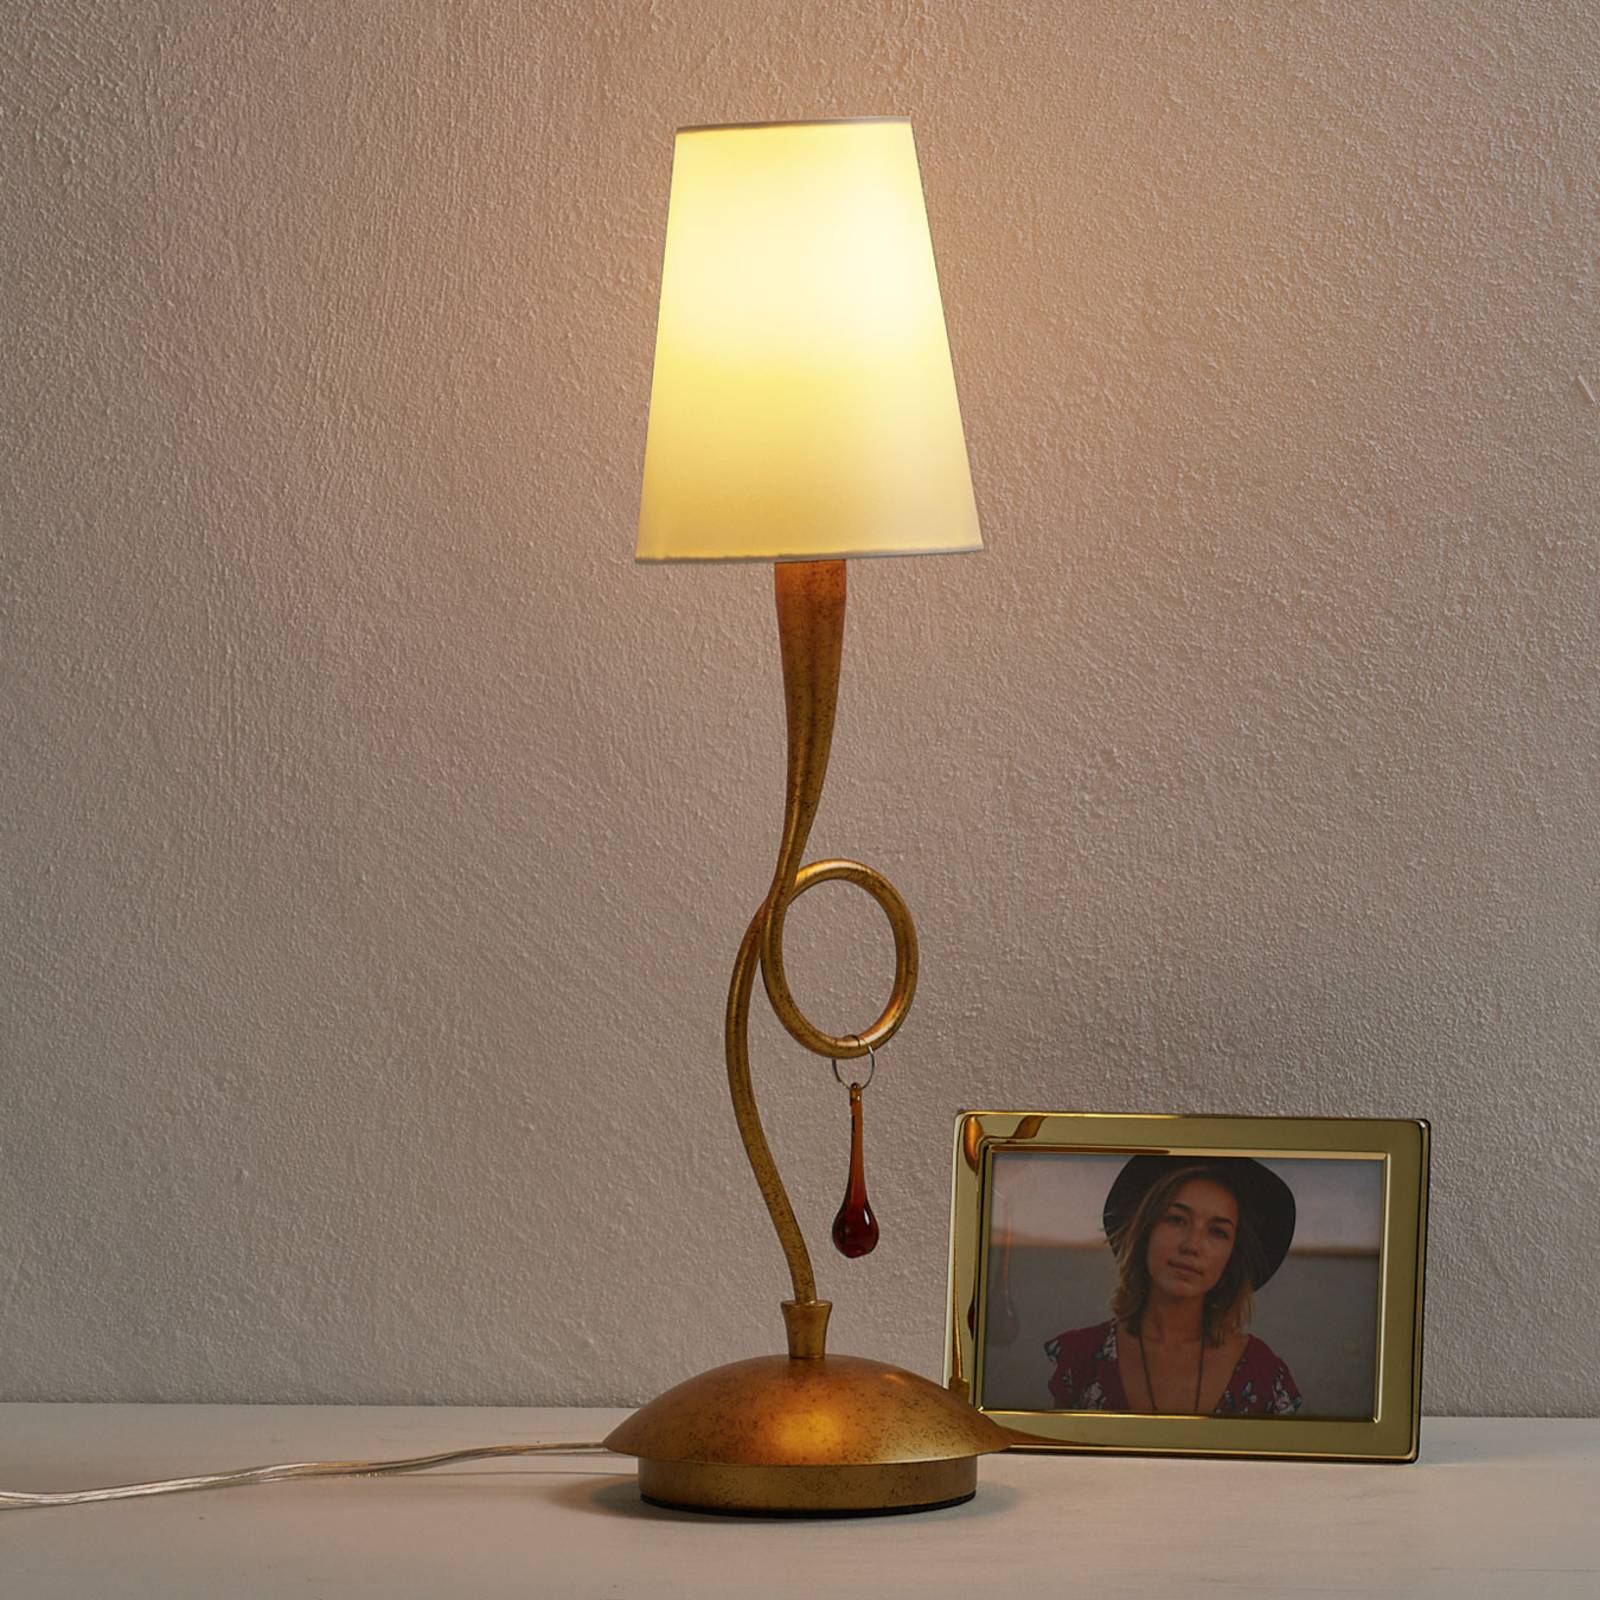 Tafellamp Paola m 21lampje goud m textiel lampenk